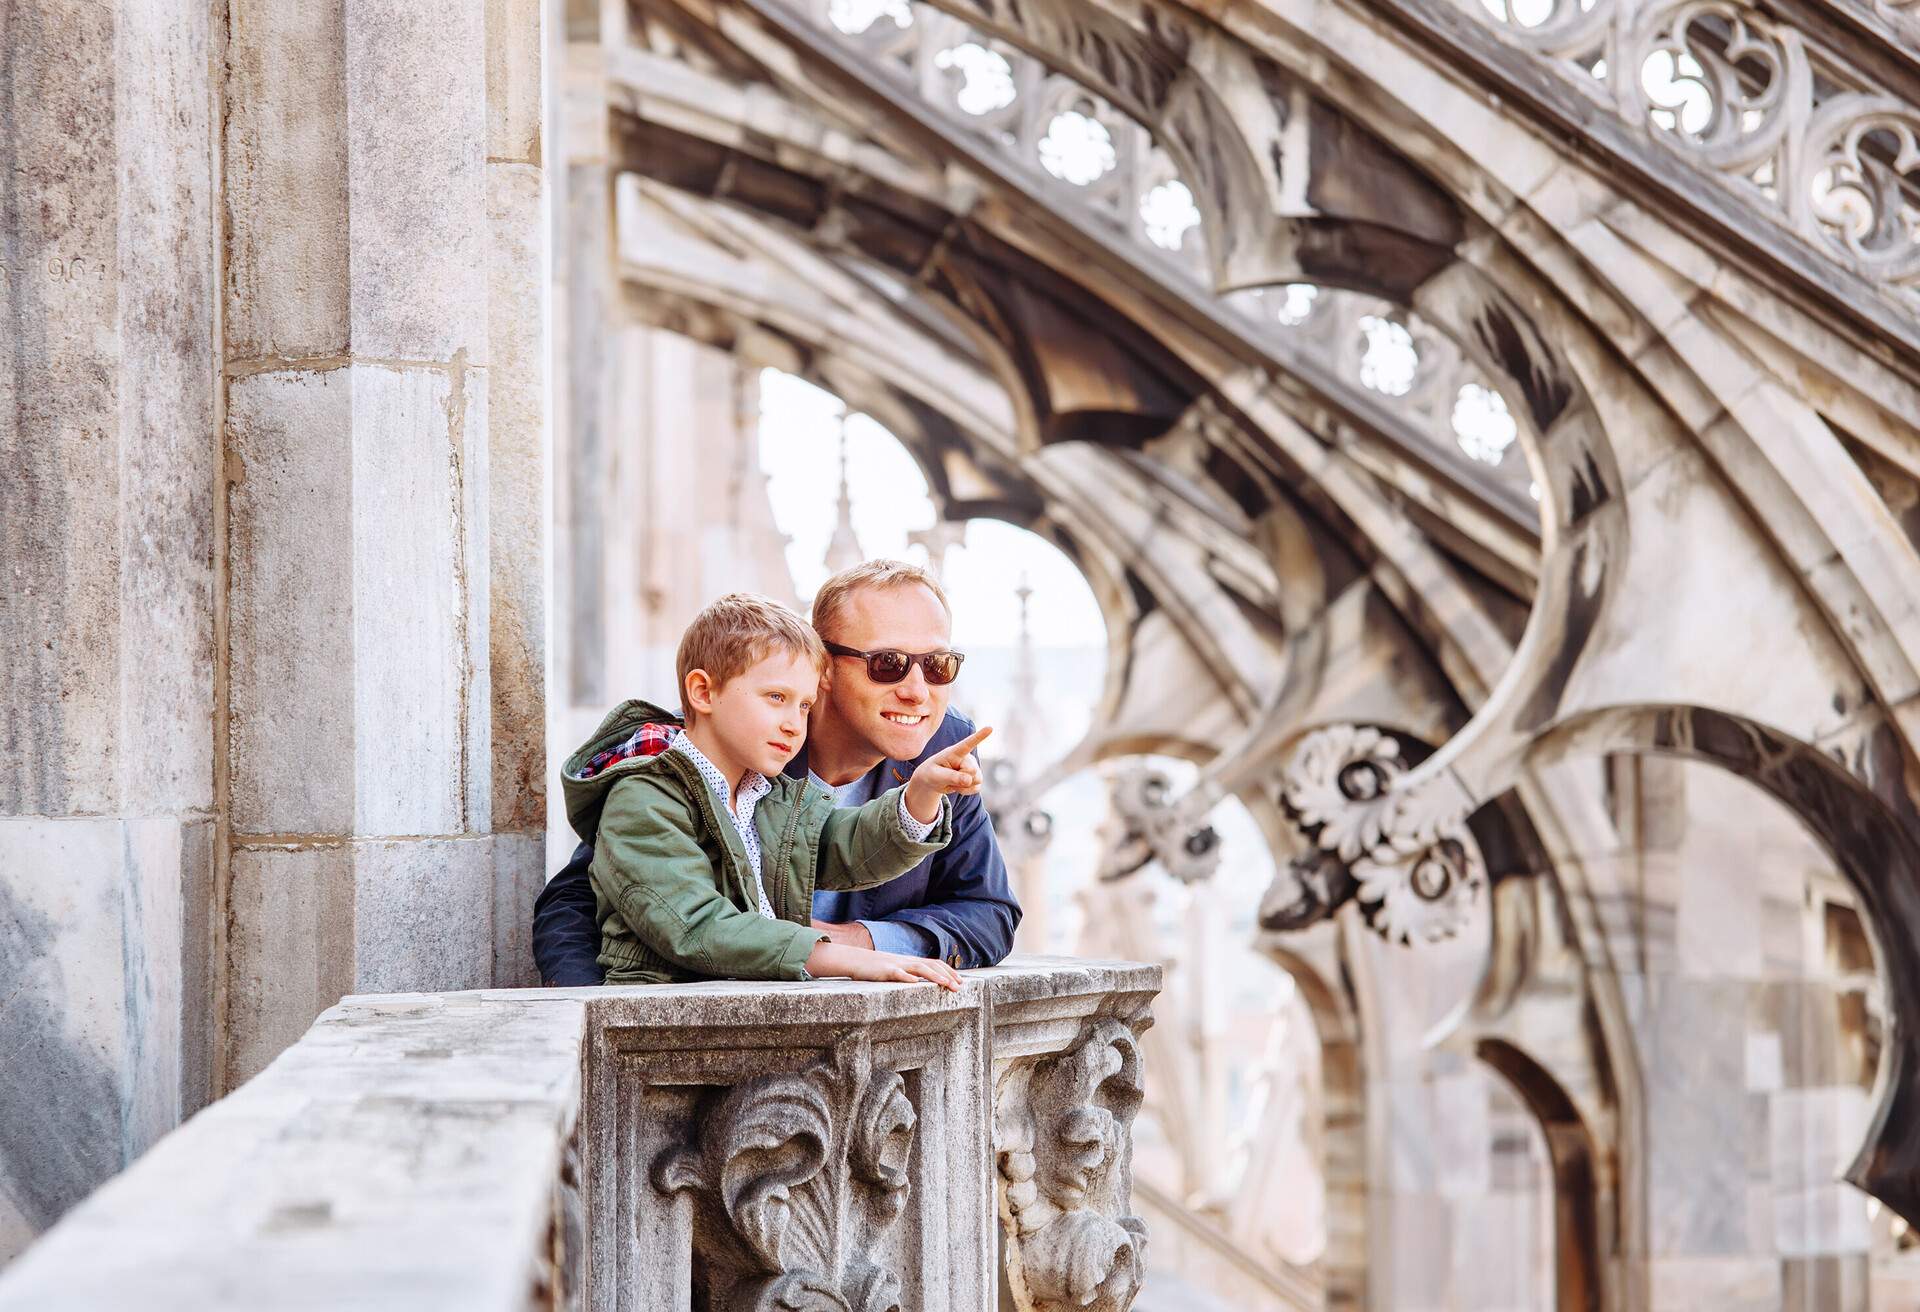 DEST_ITALY_MILAN Duomo di Milano Milan Cathedral GettyImages-857241430